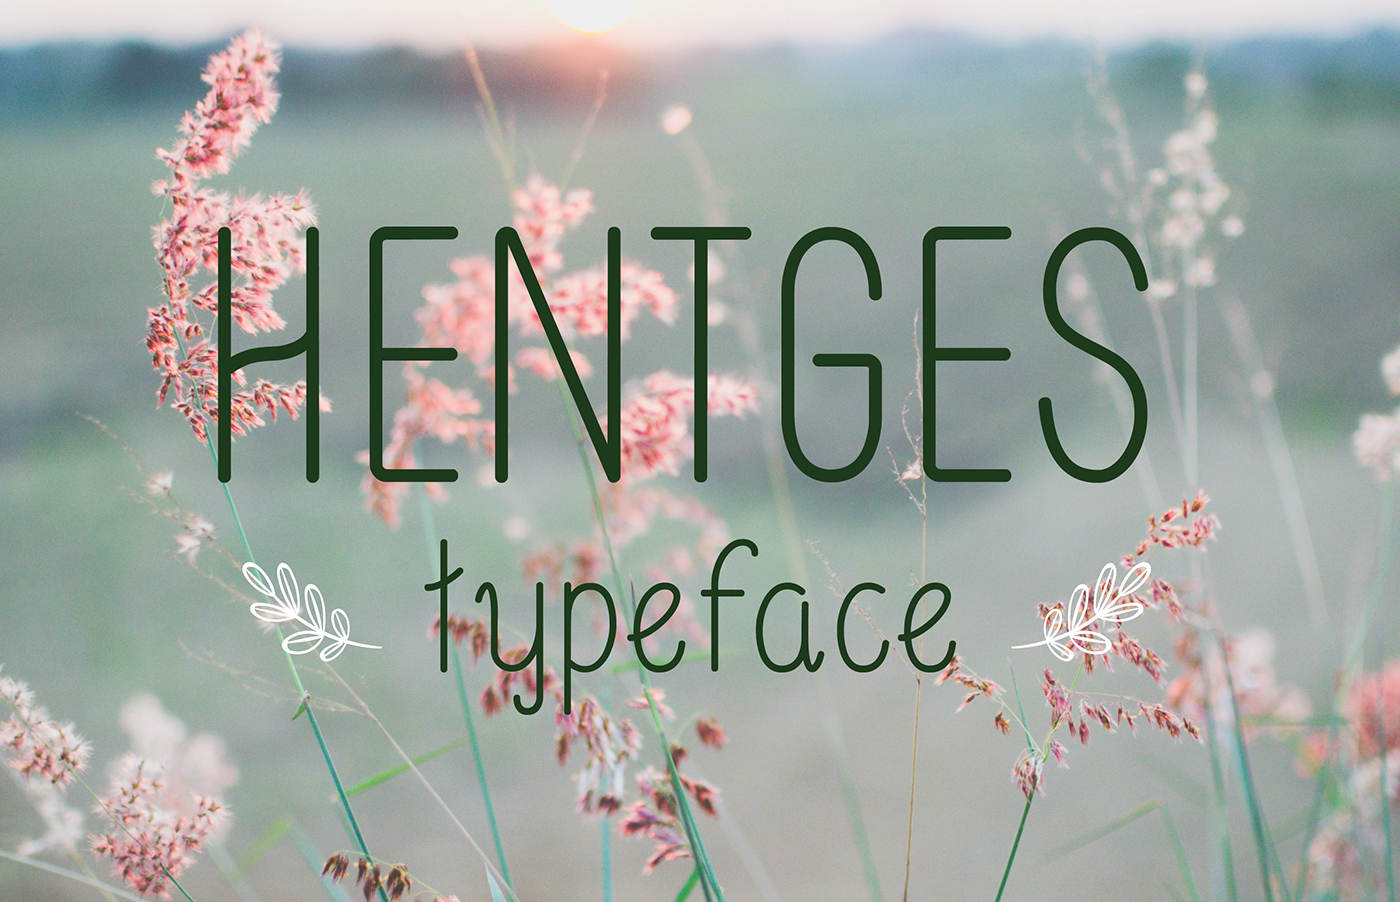 Typeface type font handmade typography  